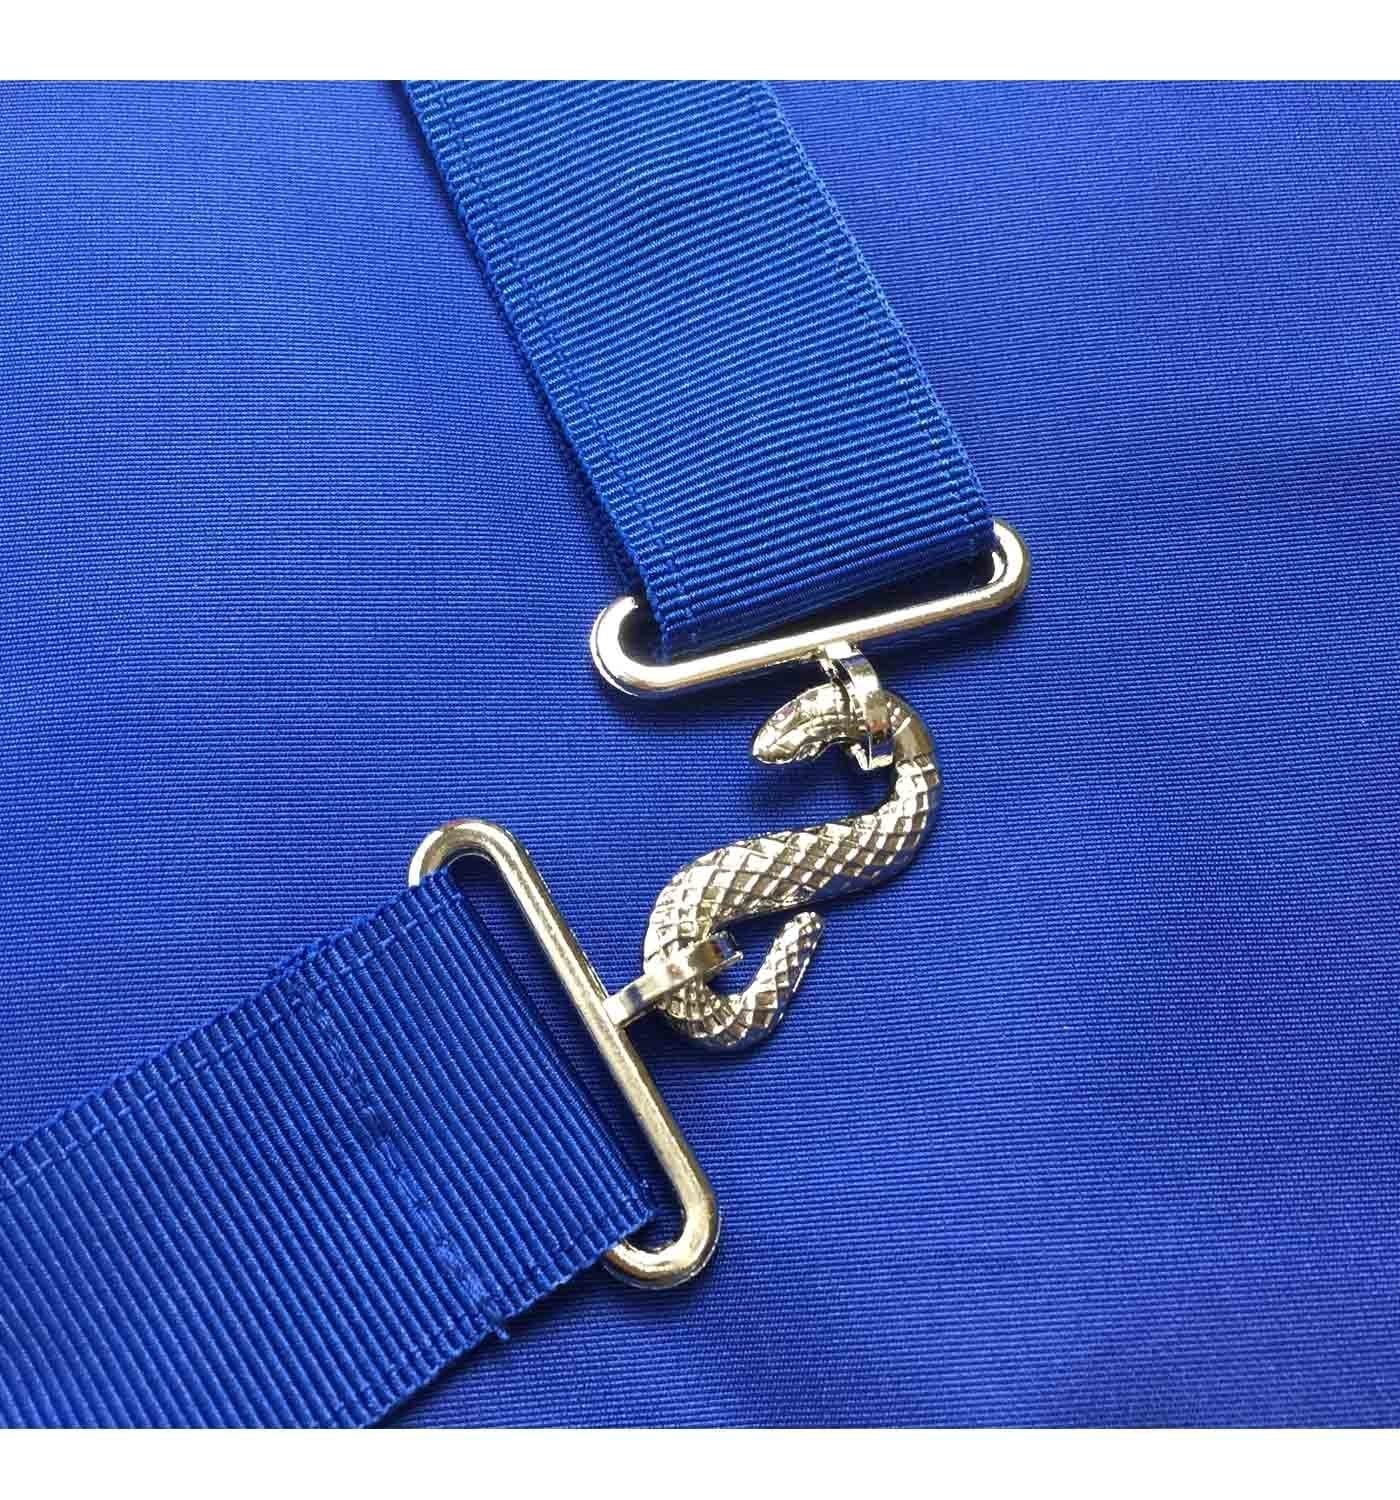 Secretary Blue Lodge Officer Apron - Royal Blue Wreath Embroidery - Bricks Masons